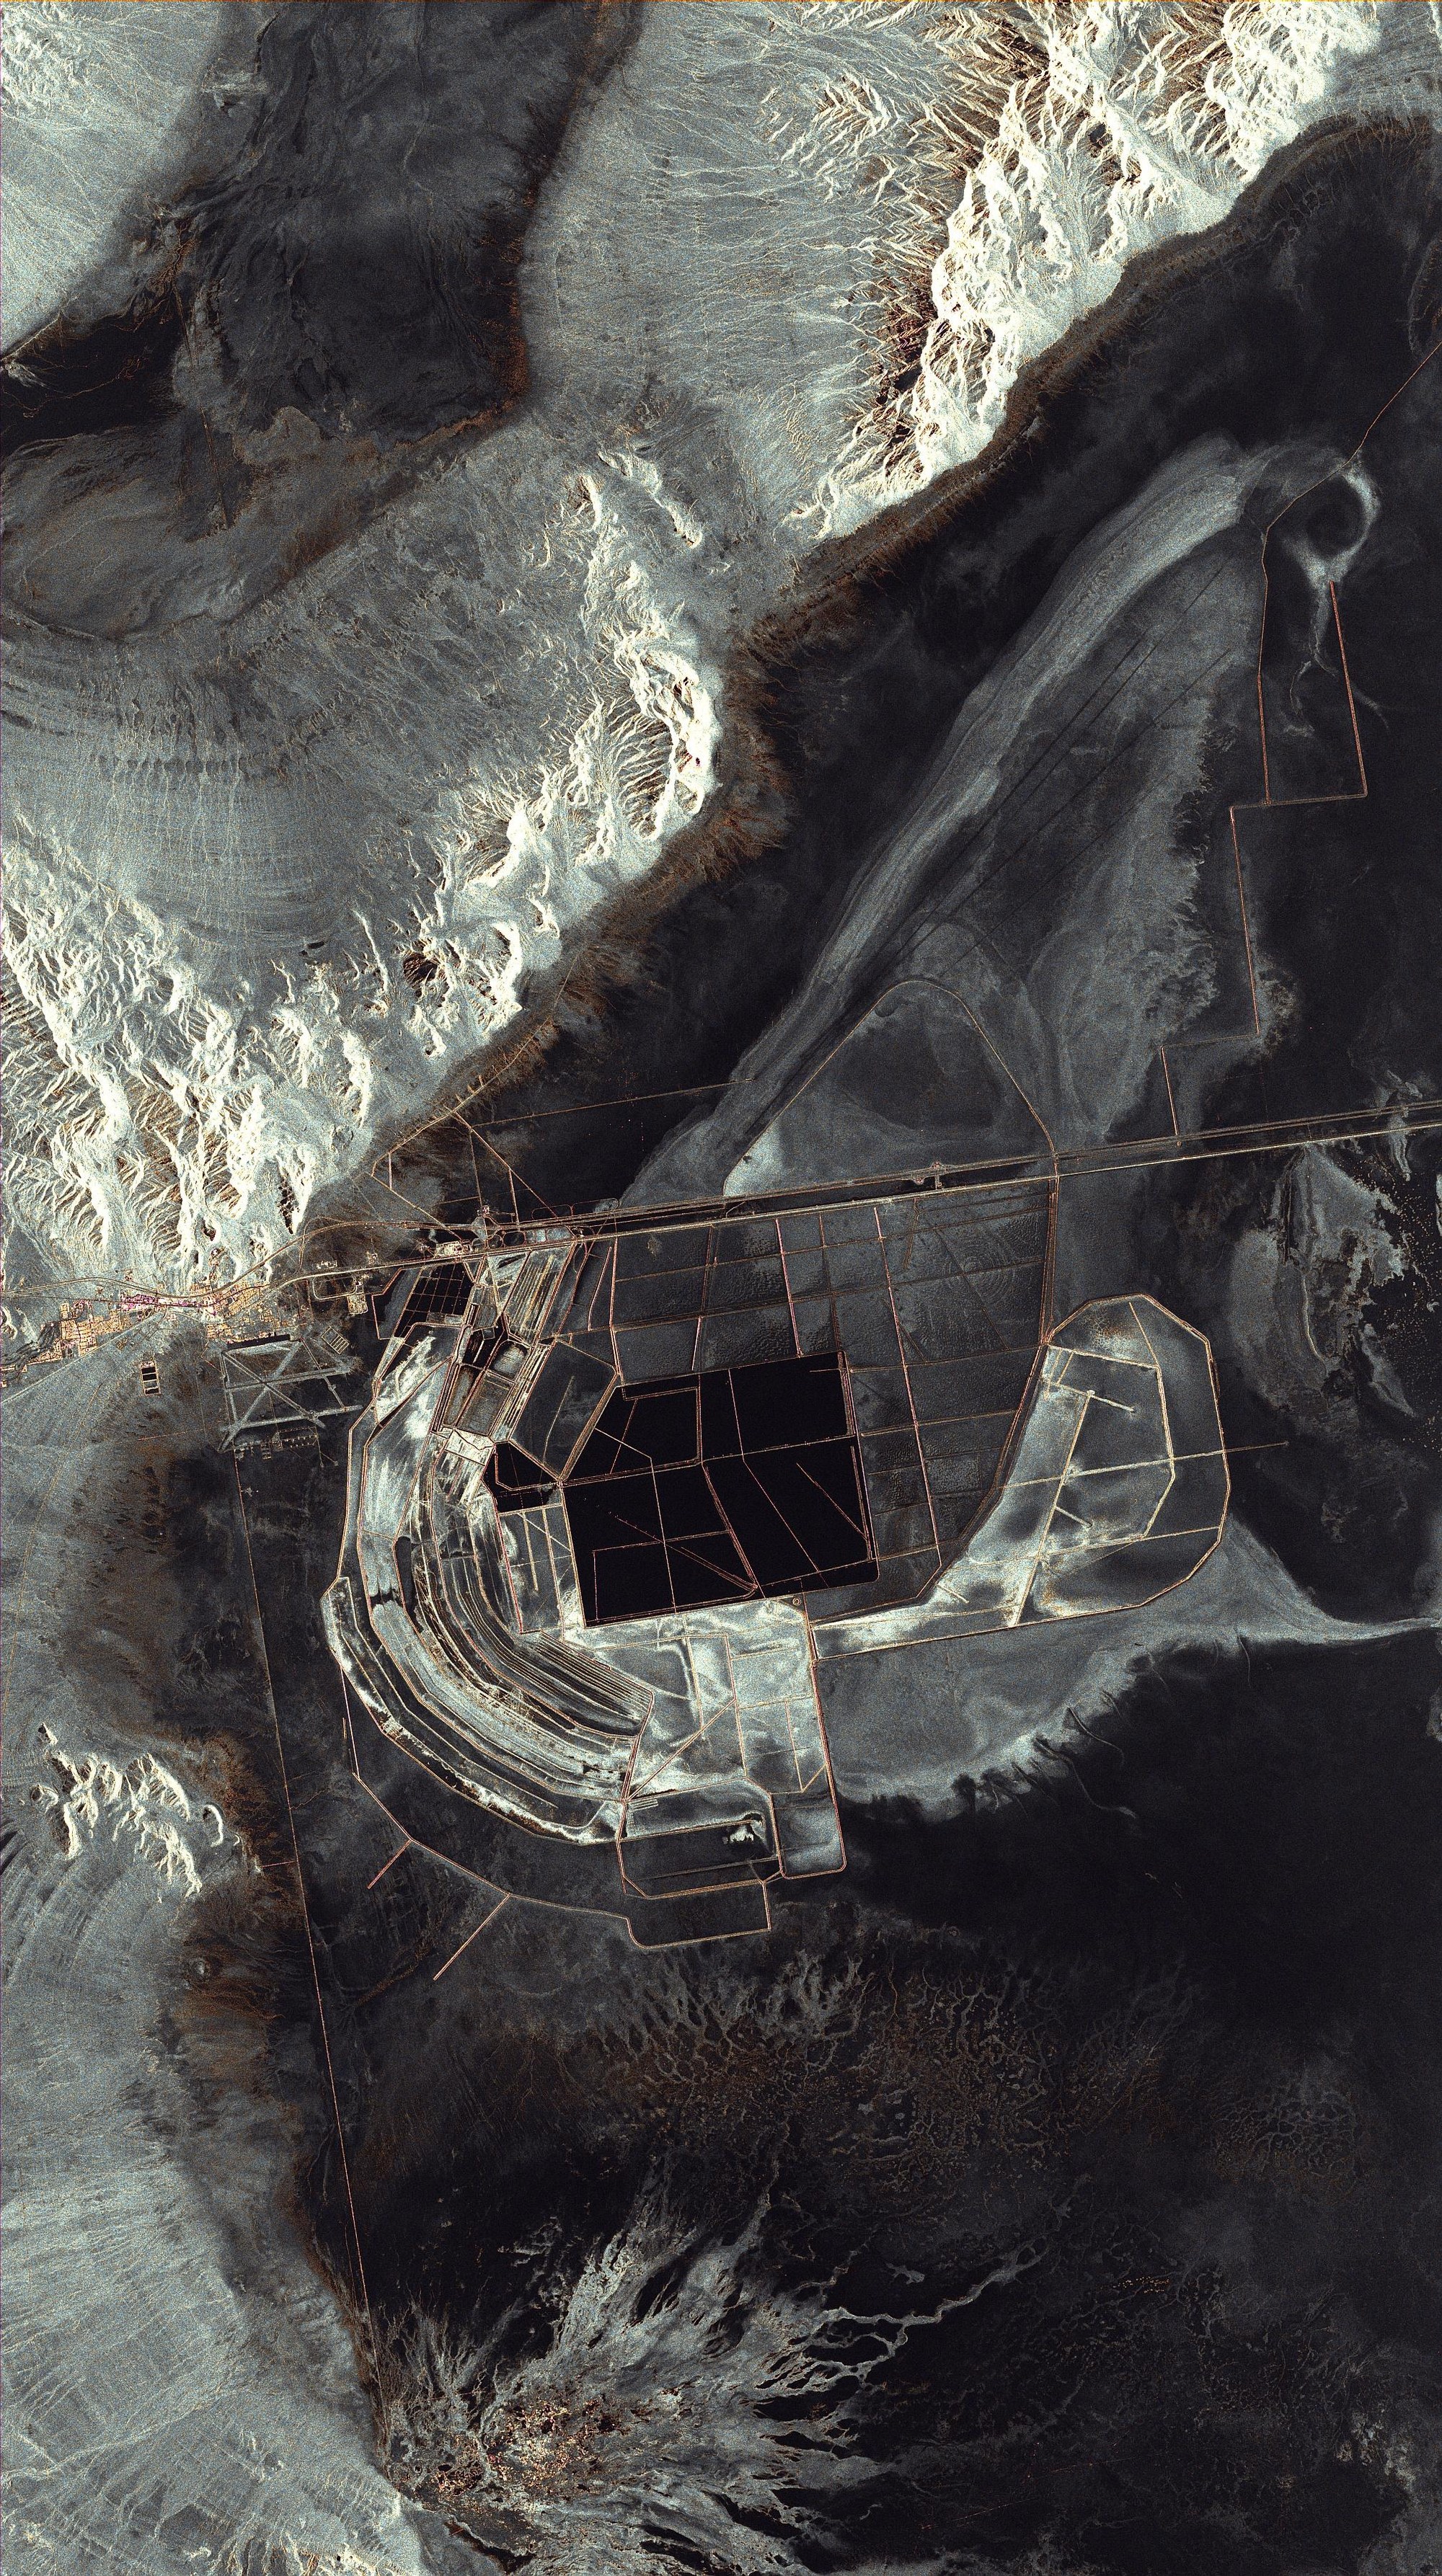 TerraSAR-X radar satellite image of salt flats